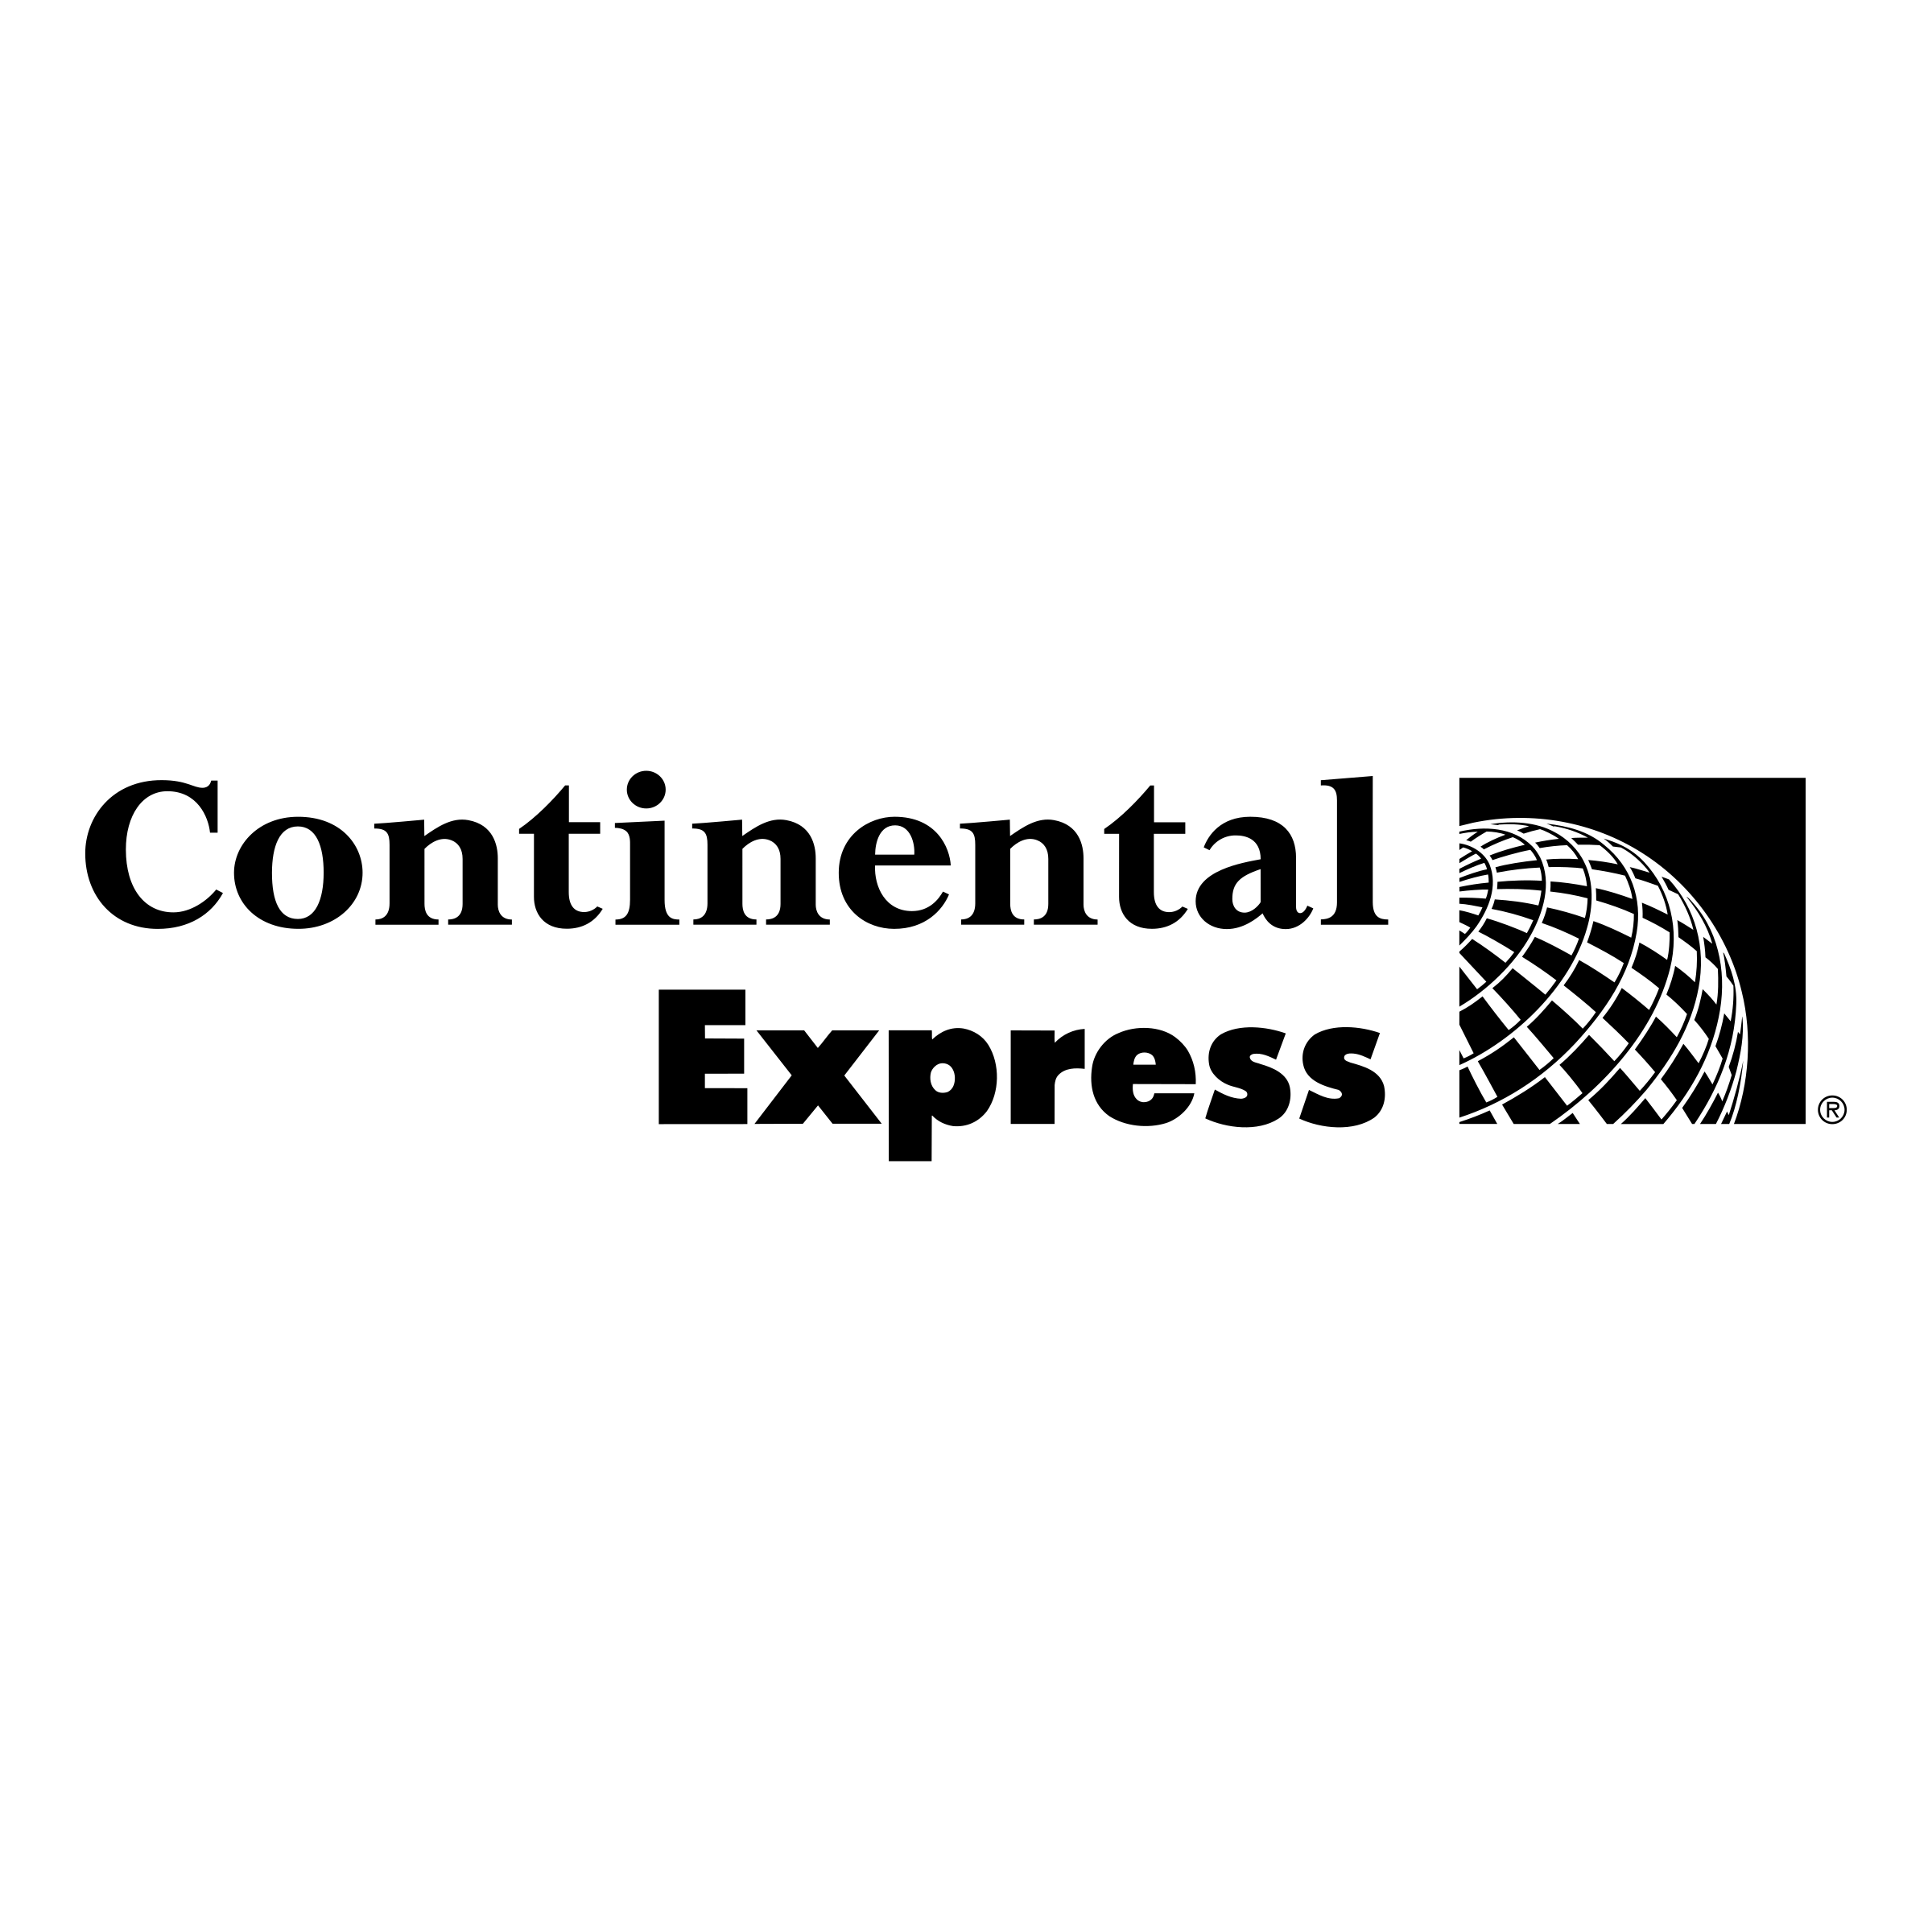 Continental Express Logo - Continental Express Logo PNG Transparent & SVG Vector